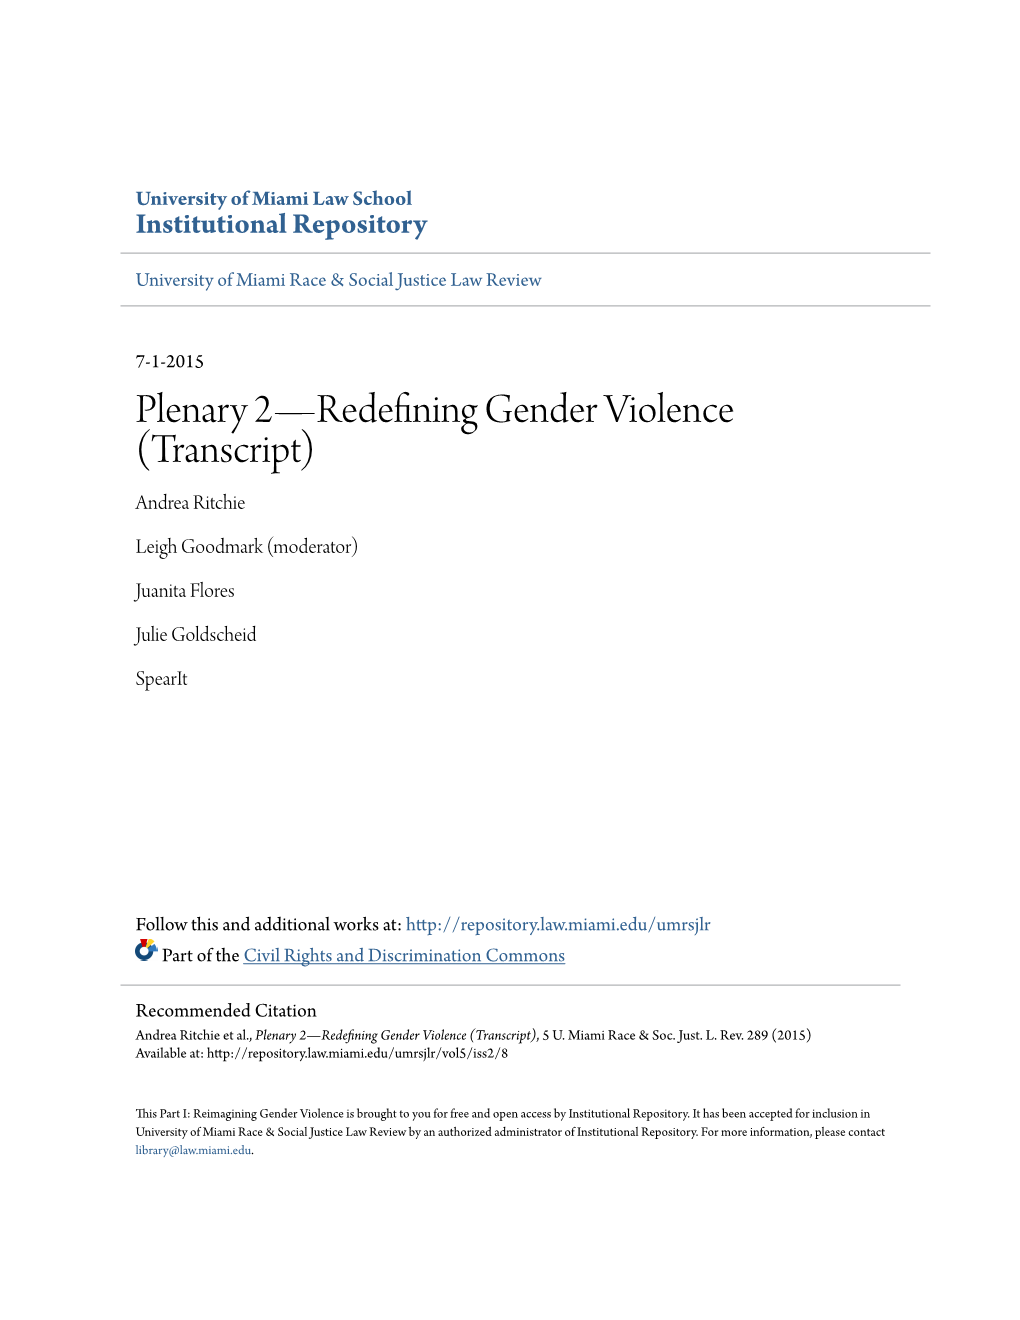 Plenary 2—Redefining Gender Violence (Transcript) Andrea Ritchie